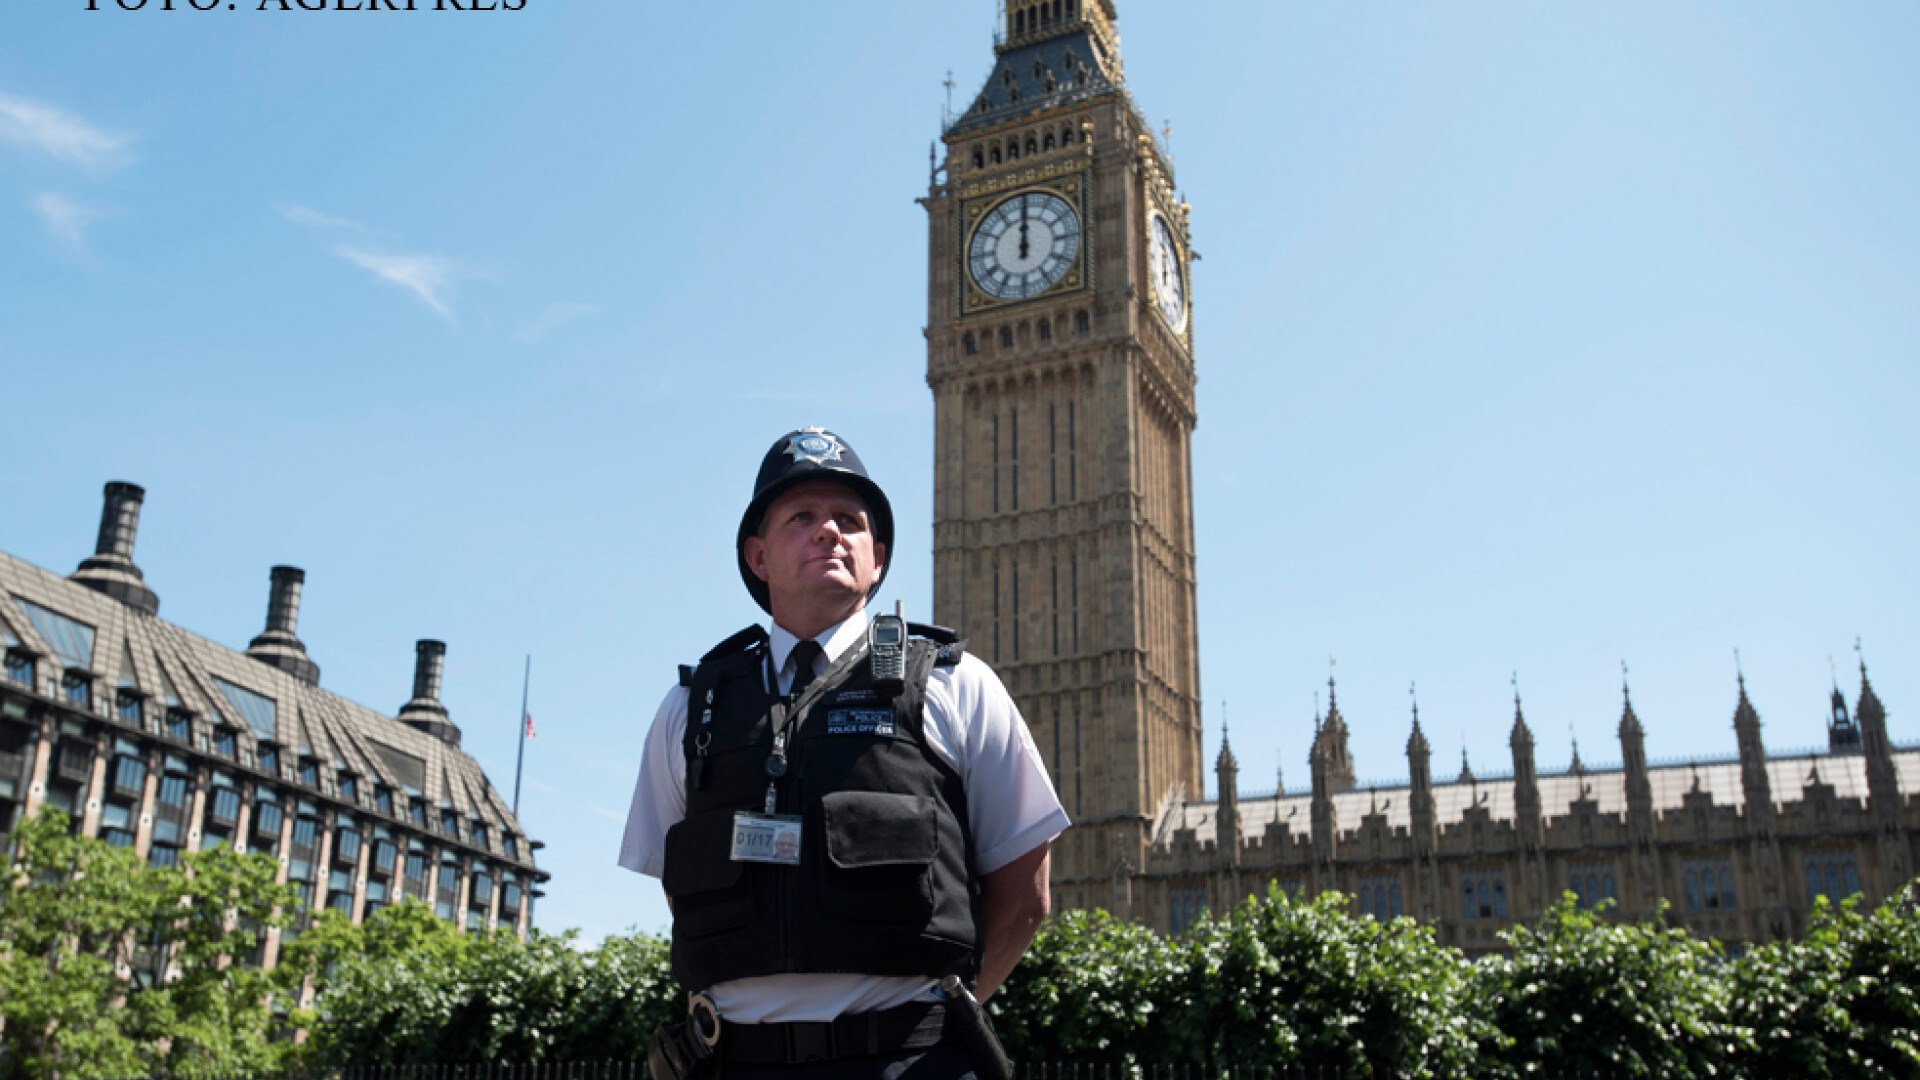 Politist britanic in fata Big Ben